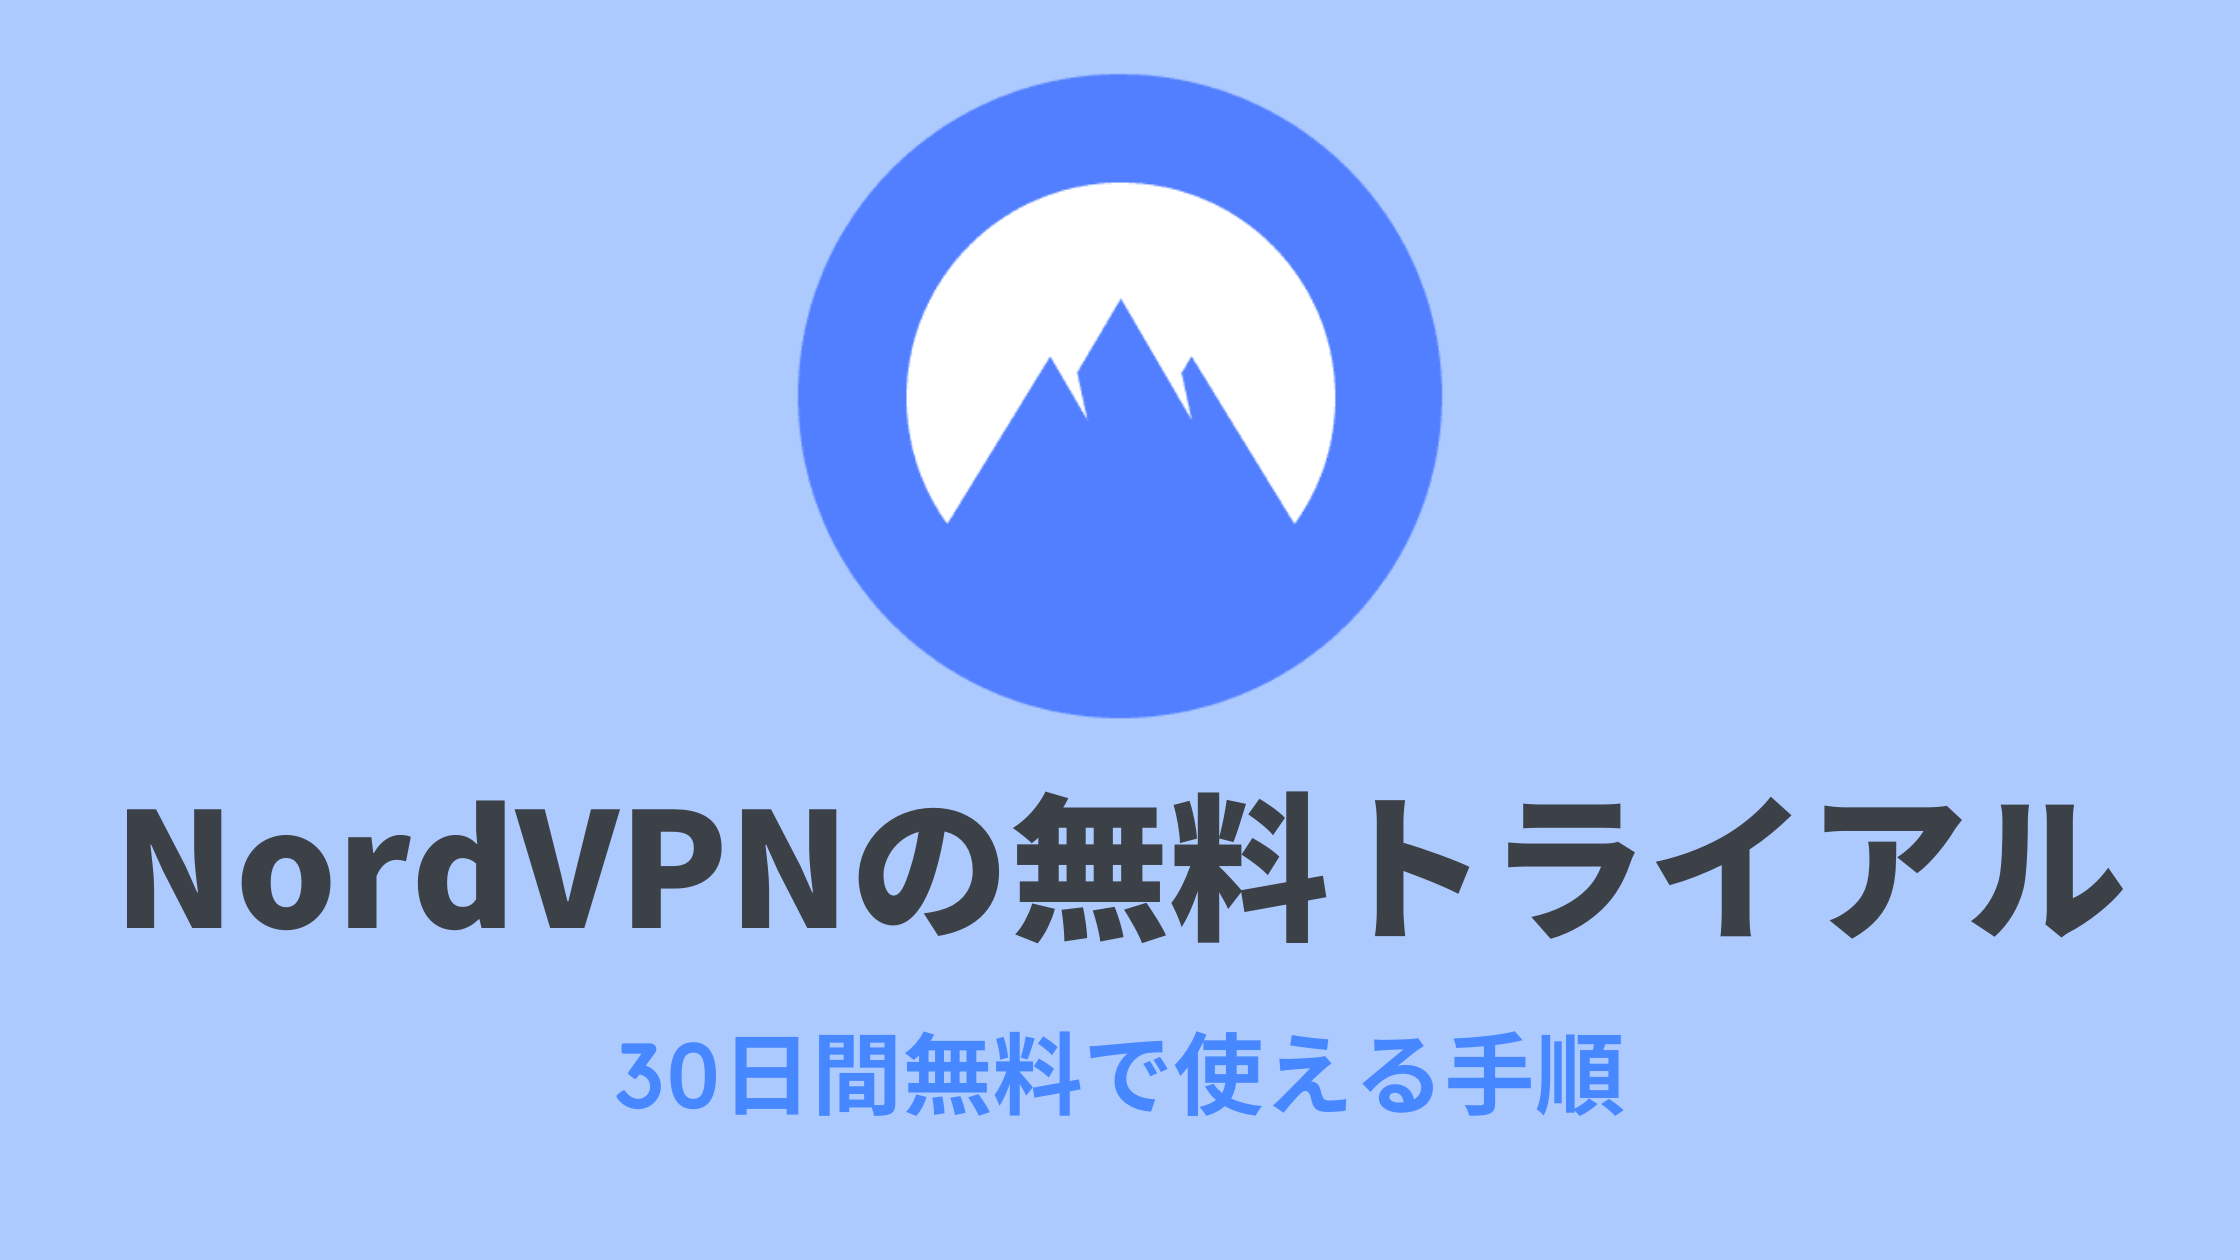 NordVPNの無料トライアルに申し込む【30日間無料】